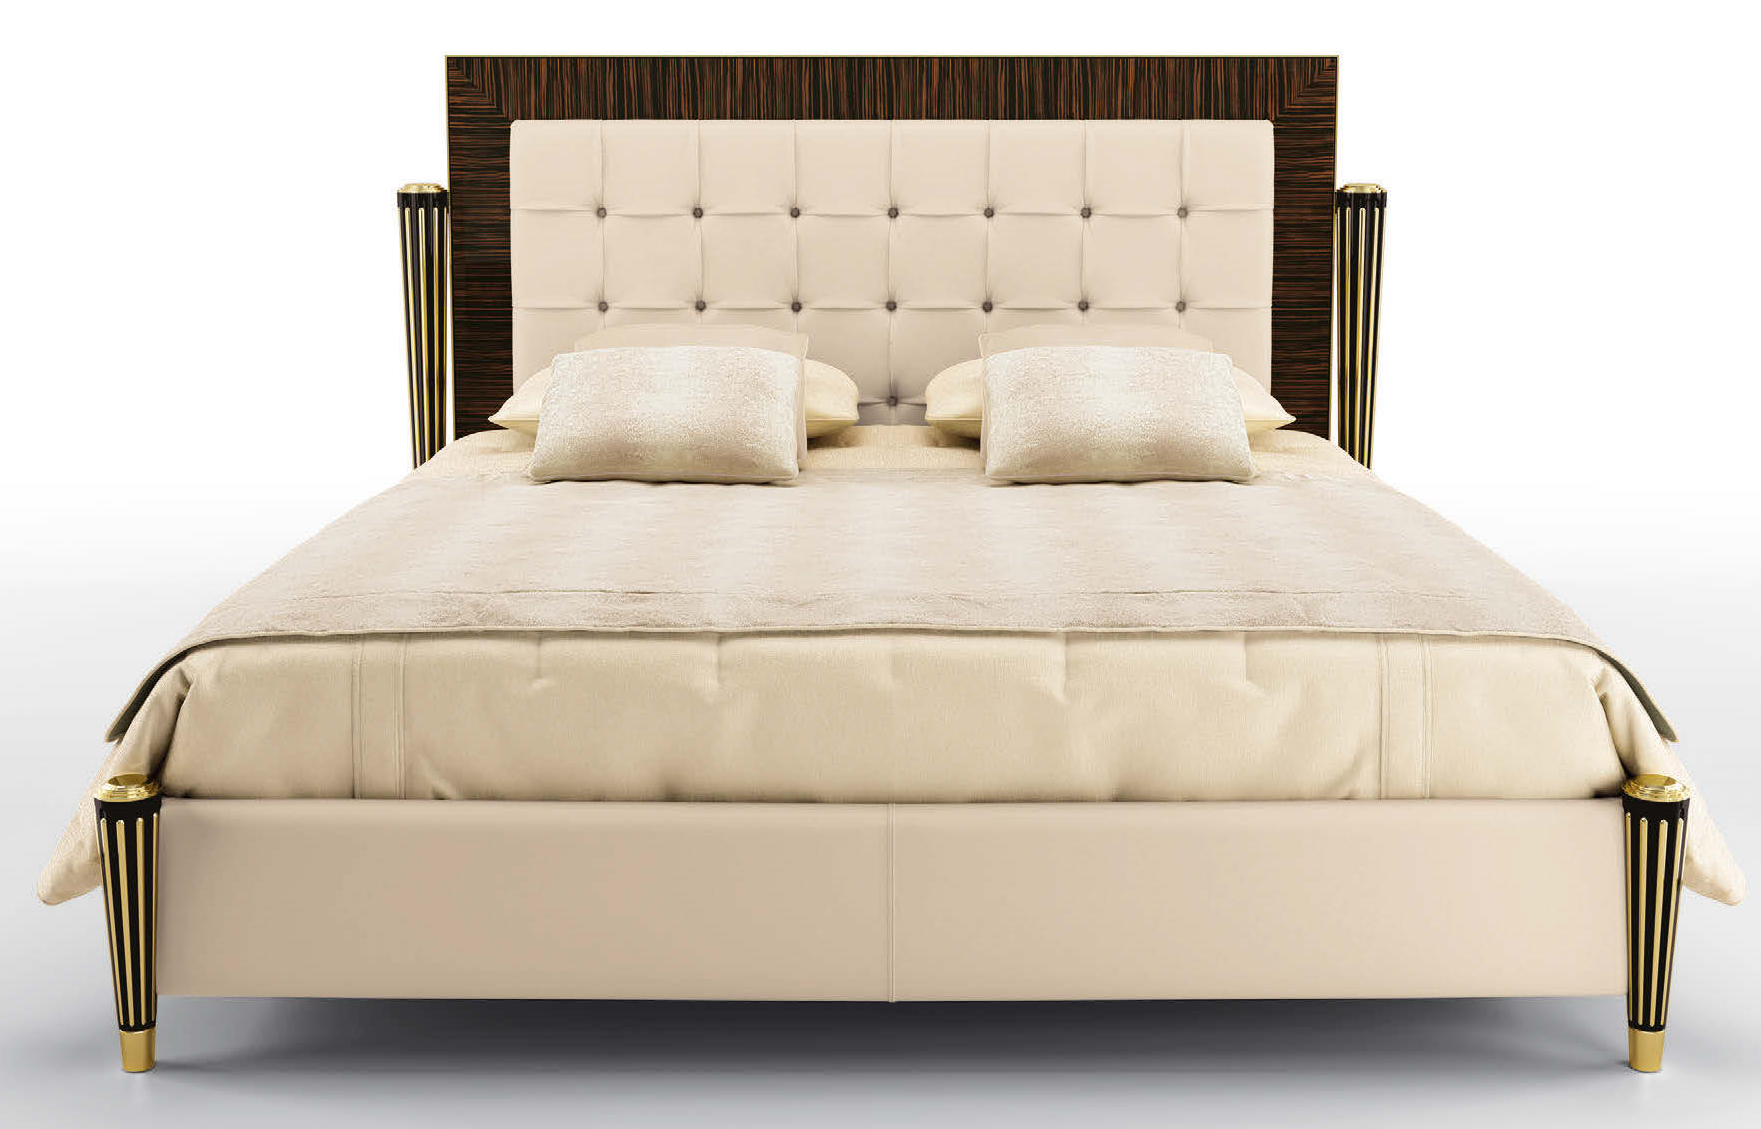 LUXURY BEDROOM FURNITURE Elegant Stardust King Size Bed